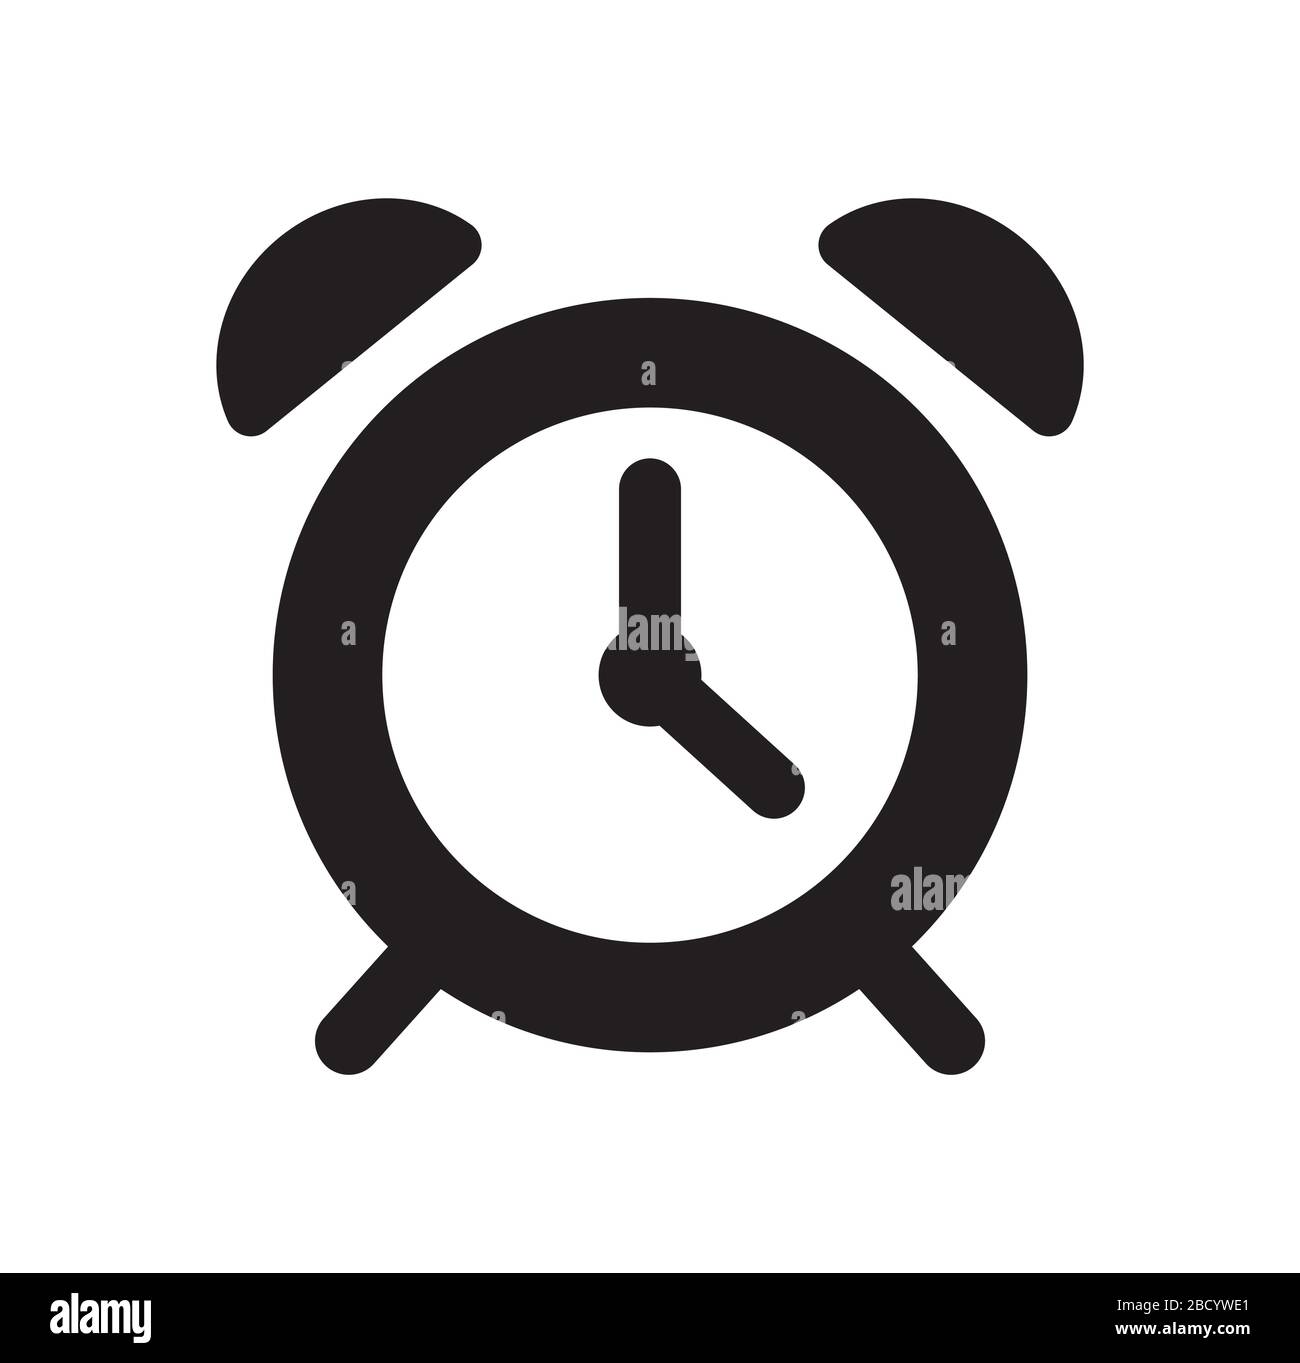 alarm / clock icon Stock Vector